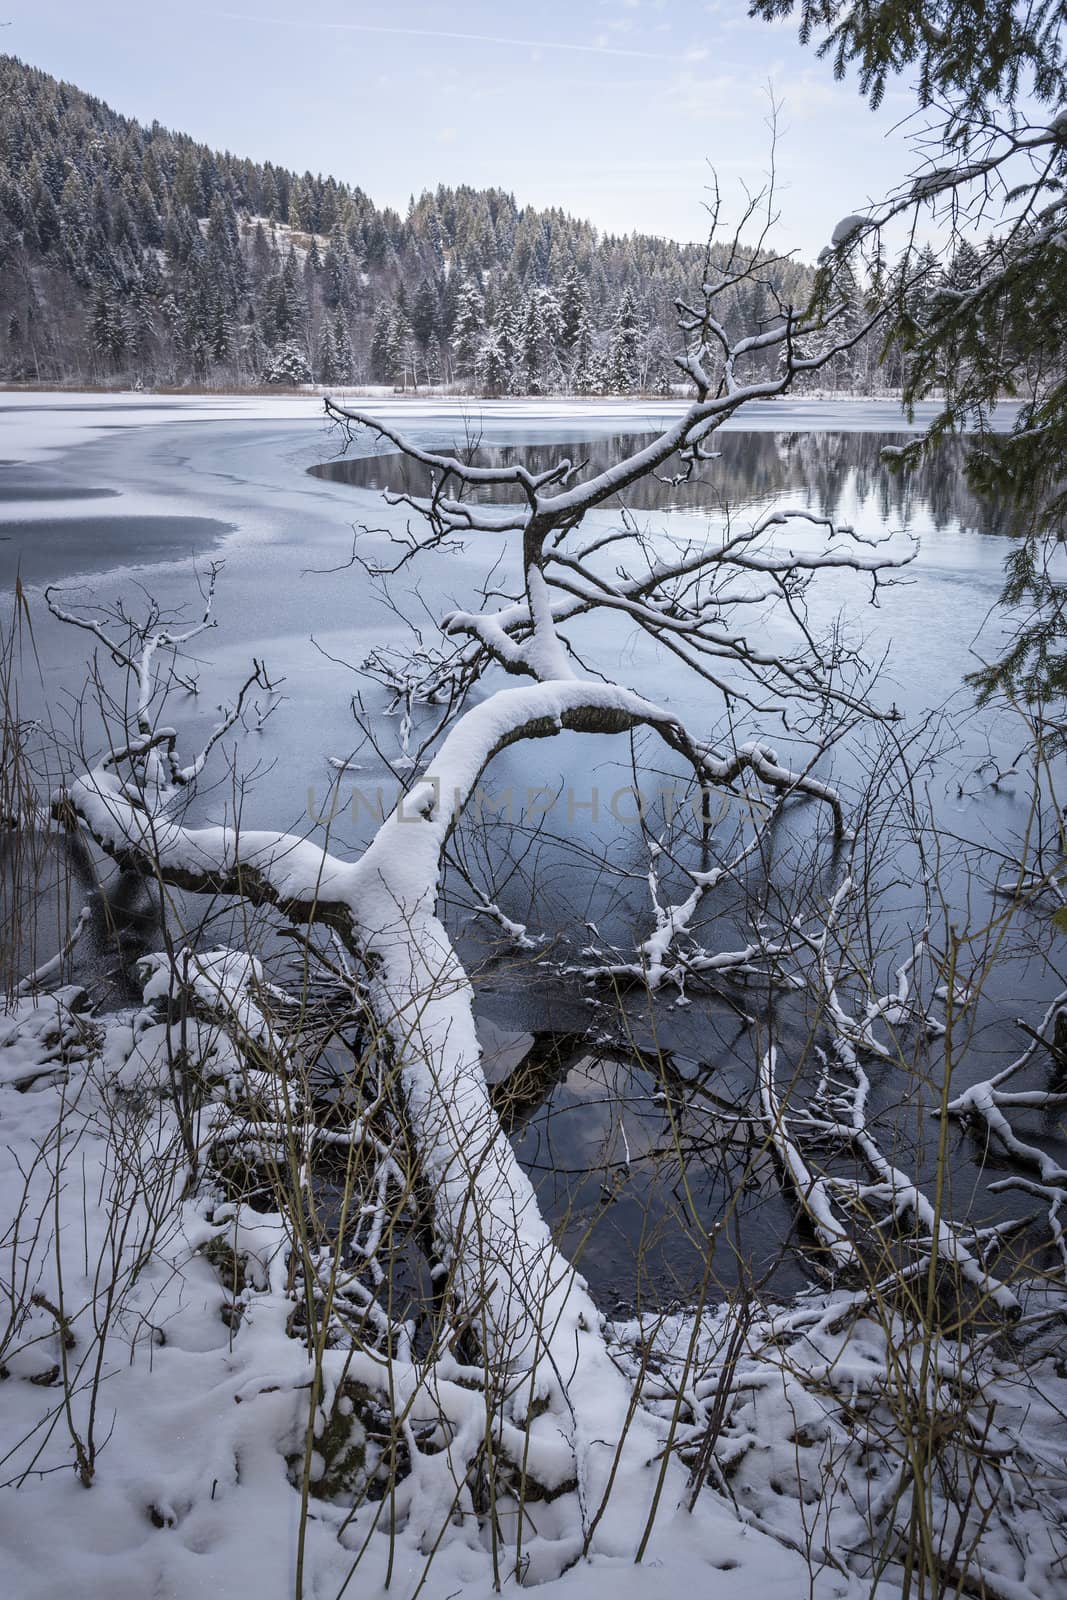 Lake in winter with fallen tree